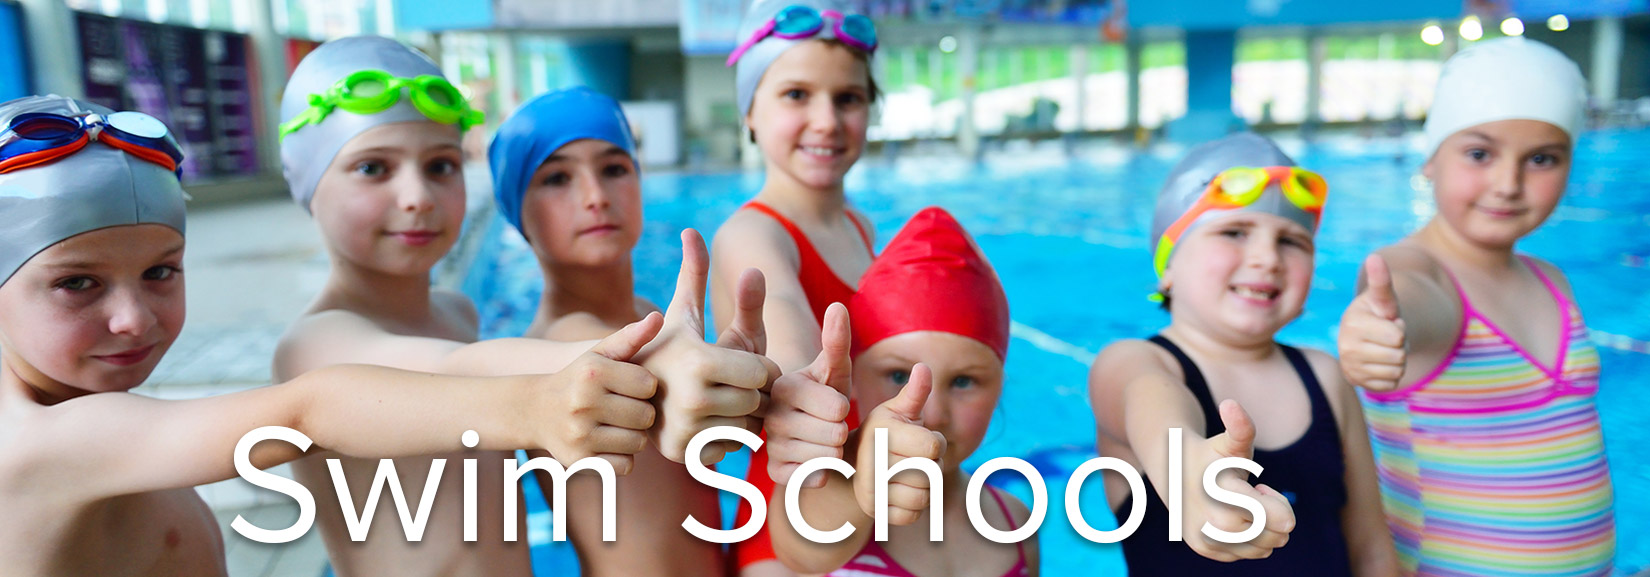 title-swim-schools